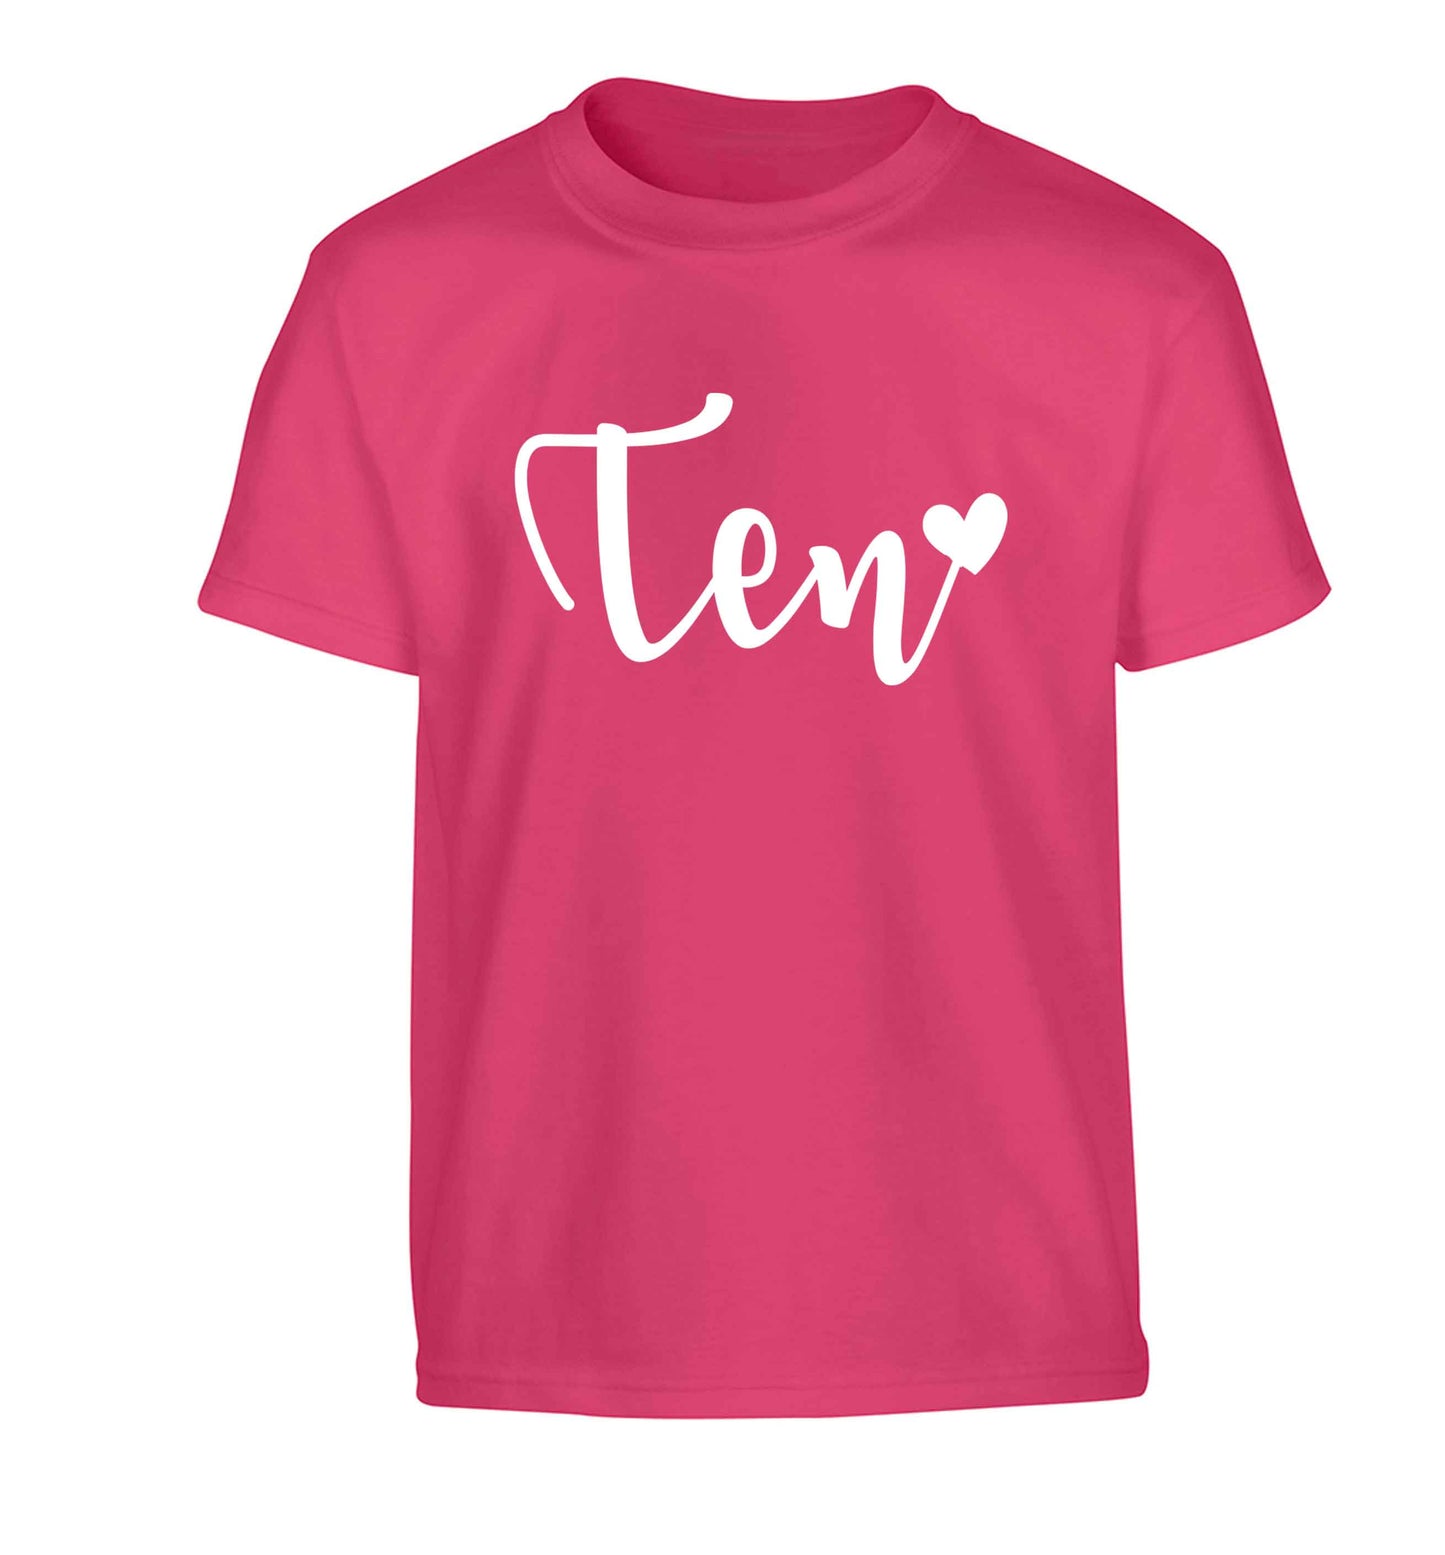 Ten and heart Children's pink Tshirt 12-13 Years